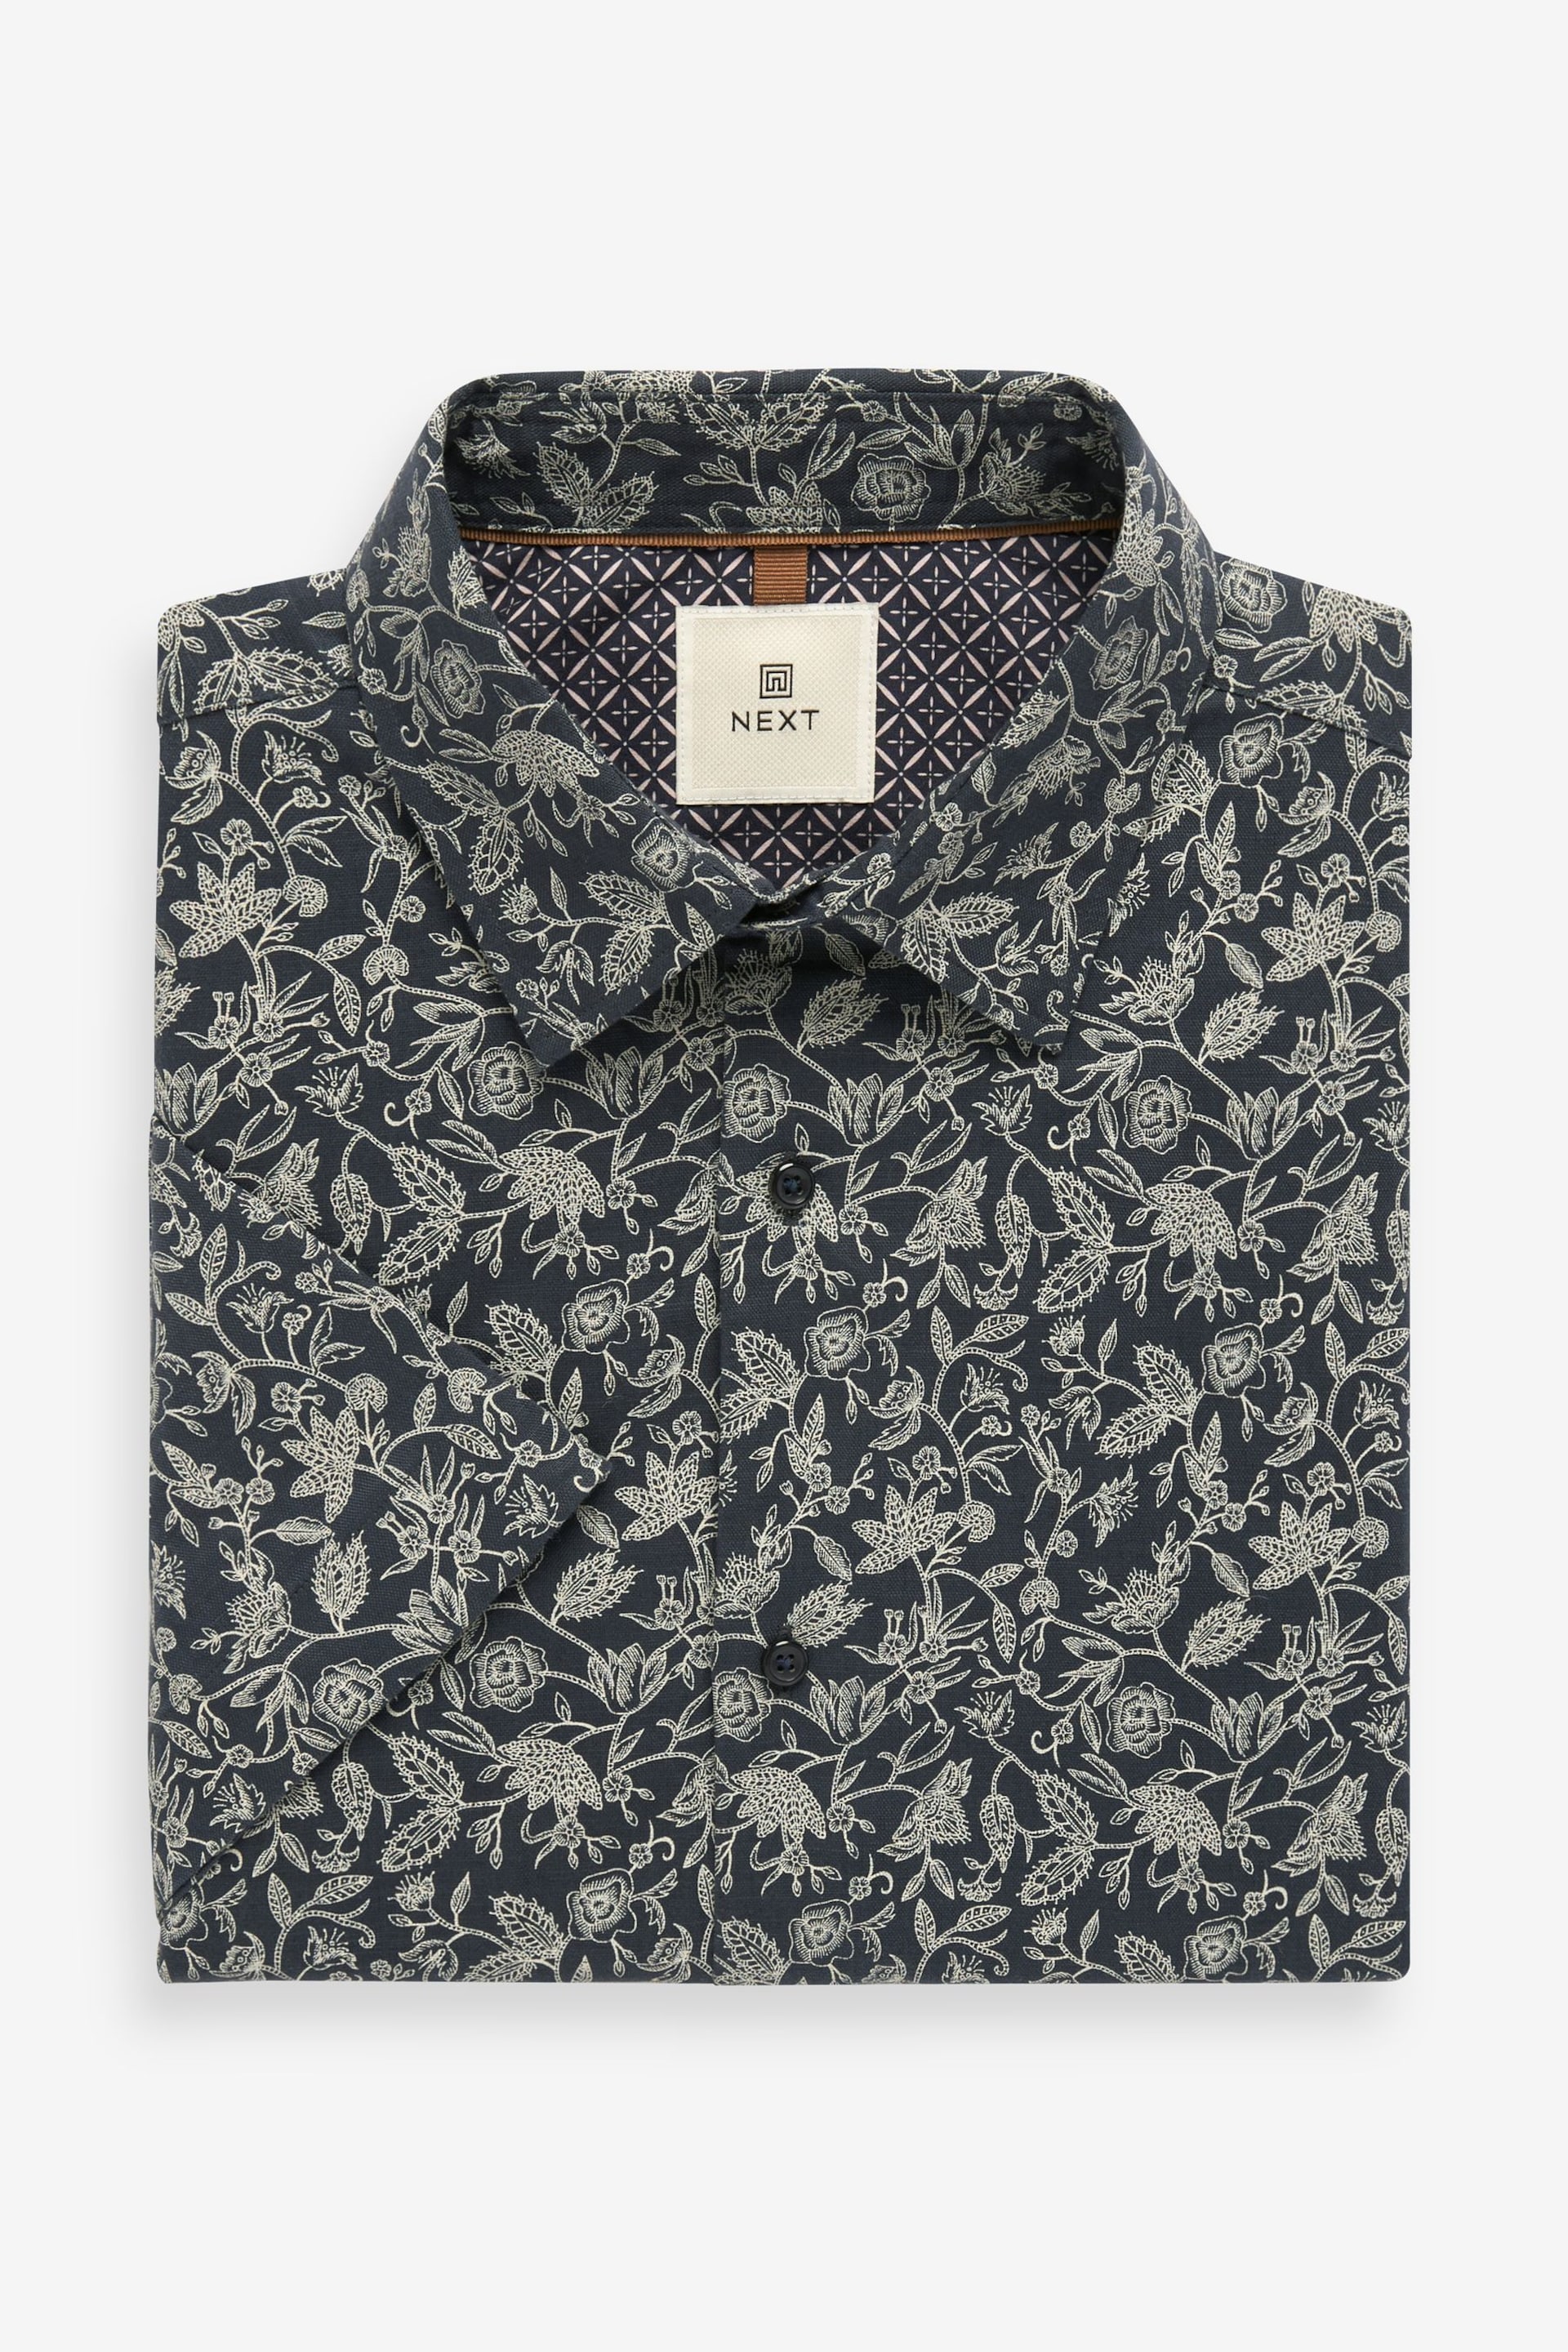 Navy Blue/Neutral Brown Floral Printed Linen Blend Shirt - Image 5 of 7